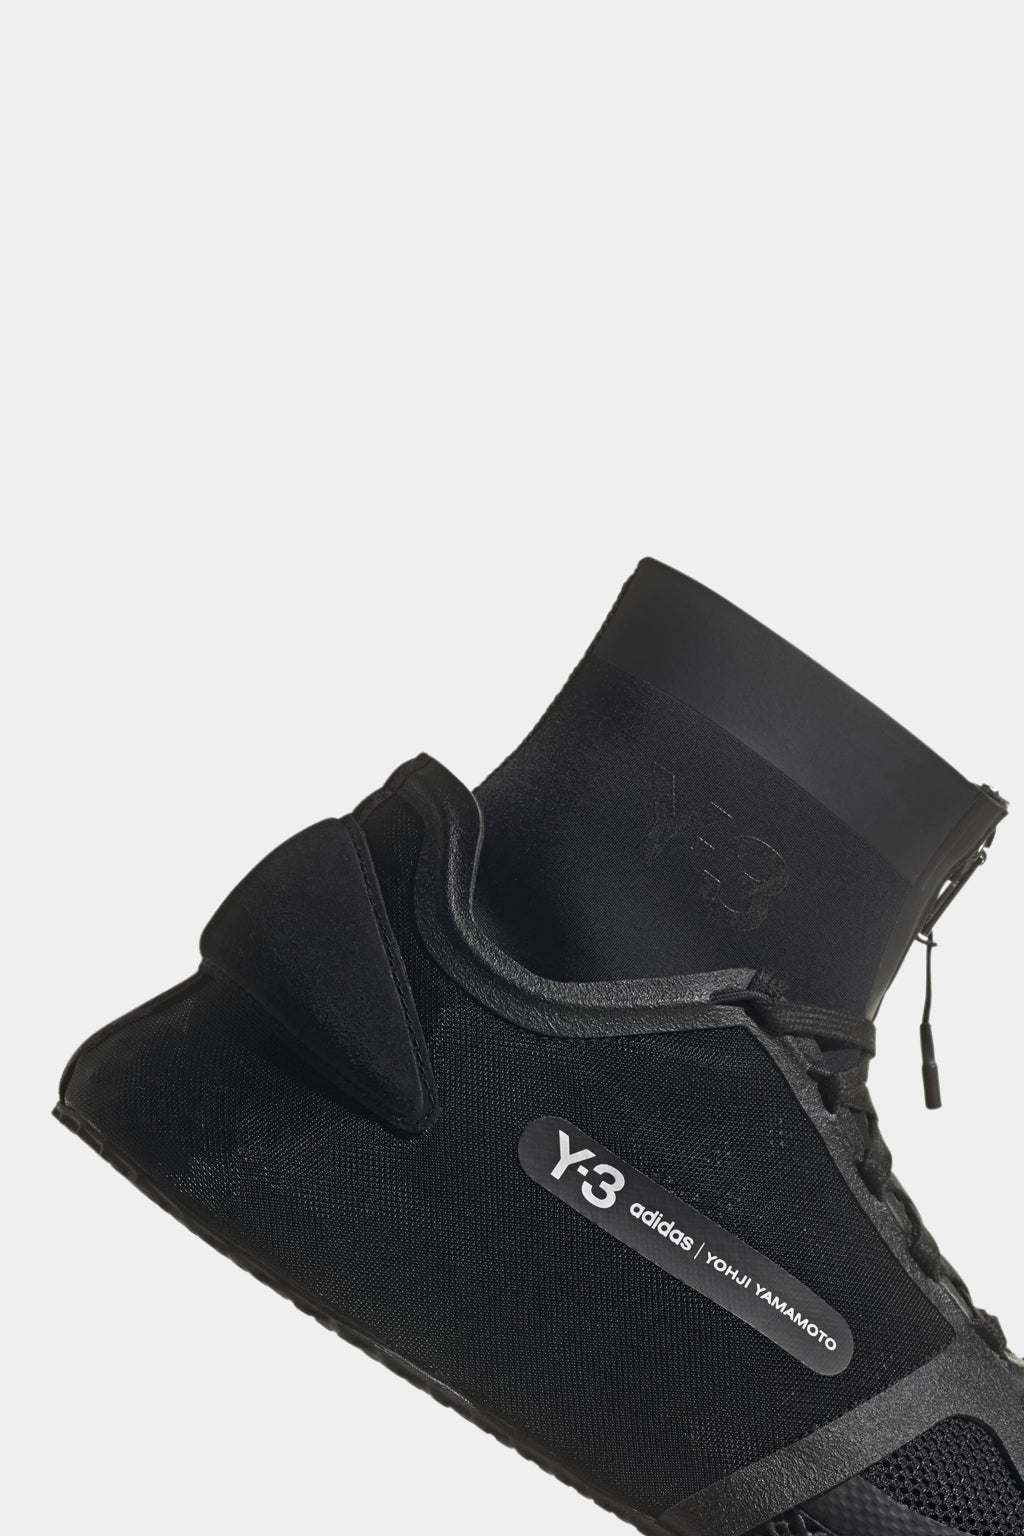 Adidas - Y-3 Runner 4d Iow